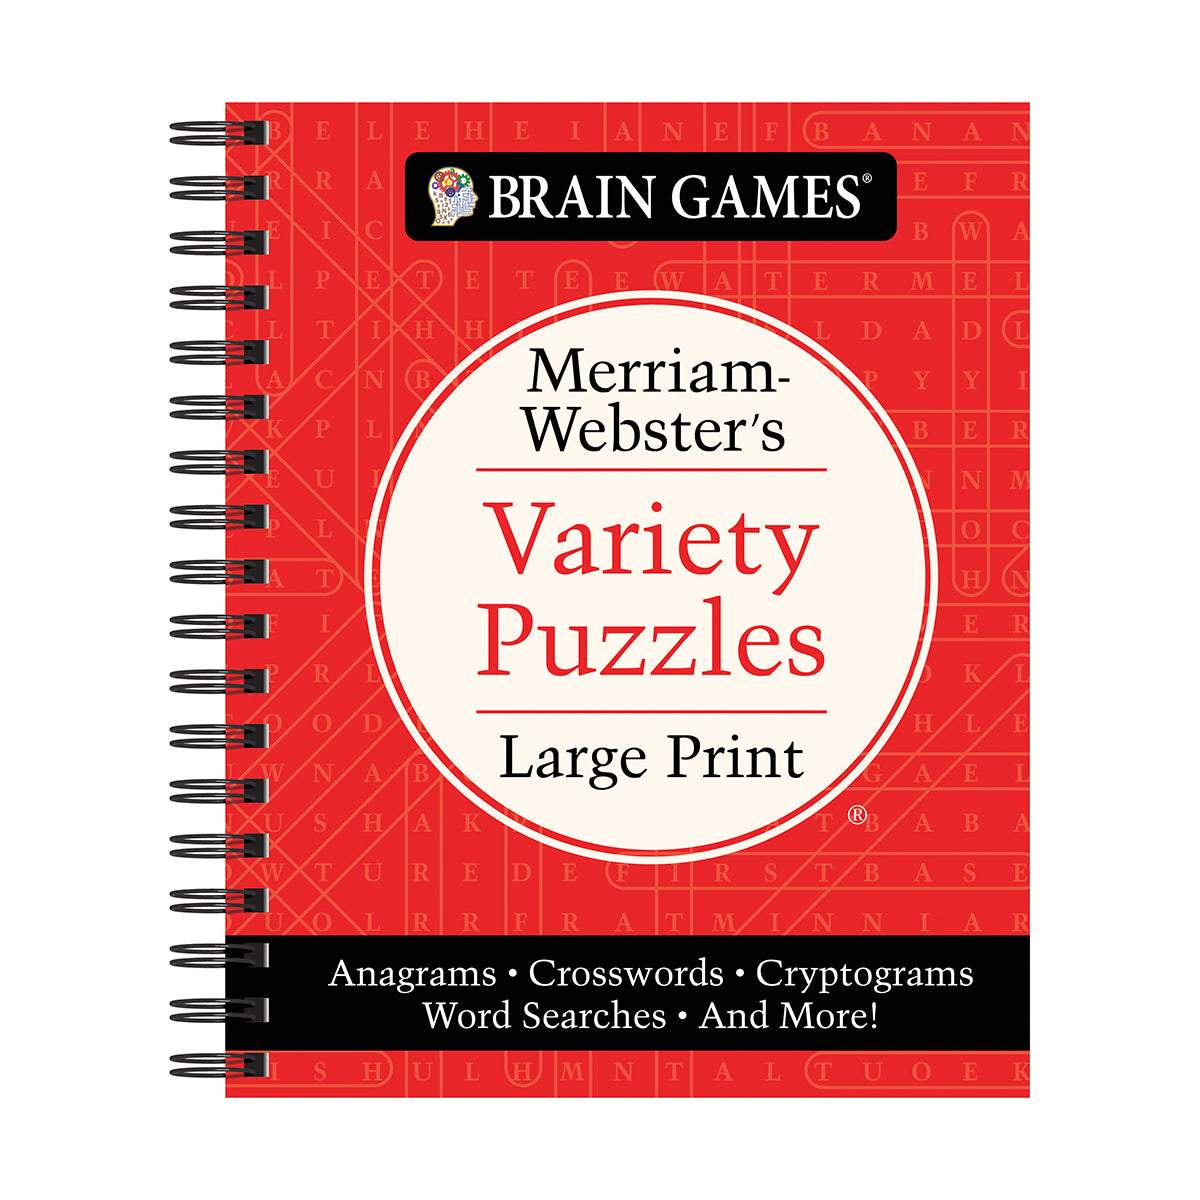 Brain Games  MerriamWebster's Variety Puzzles Large Print